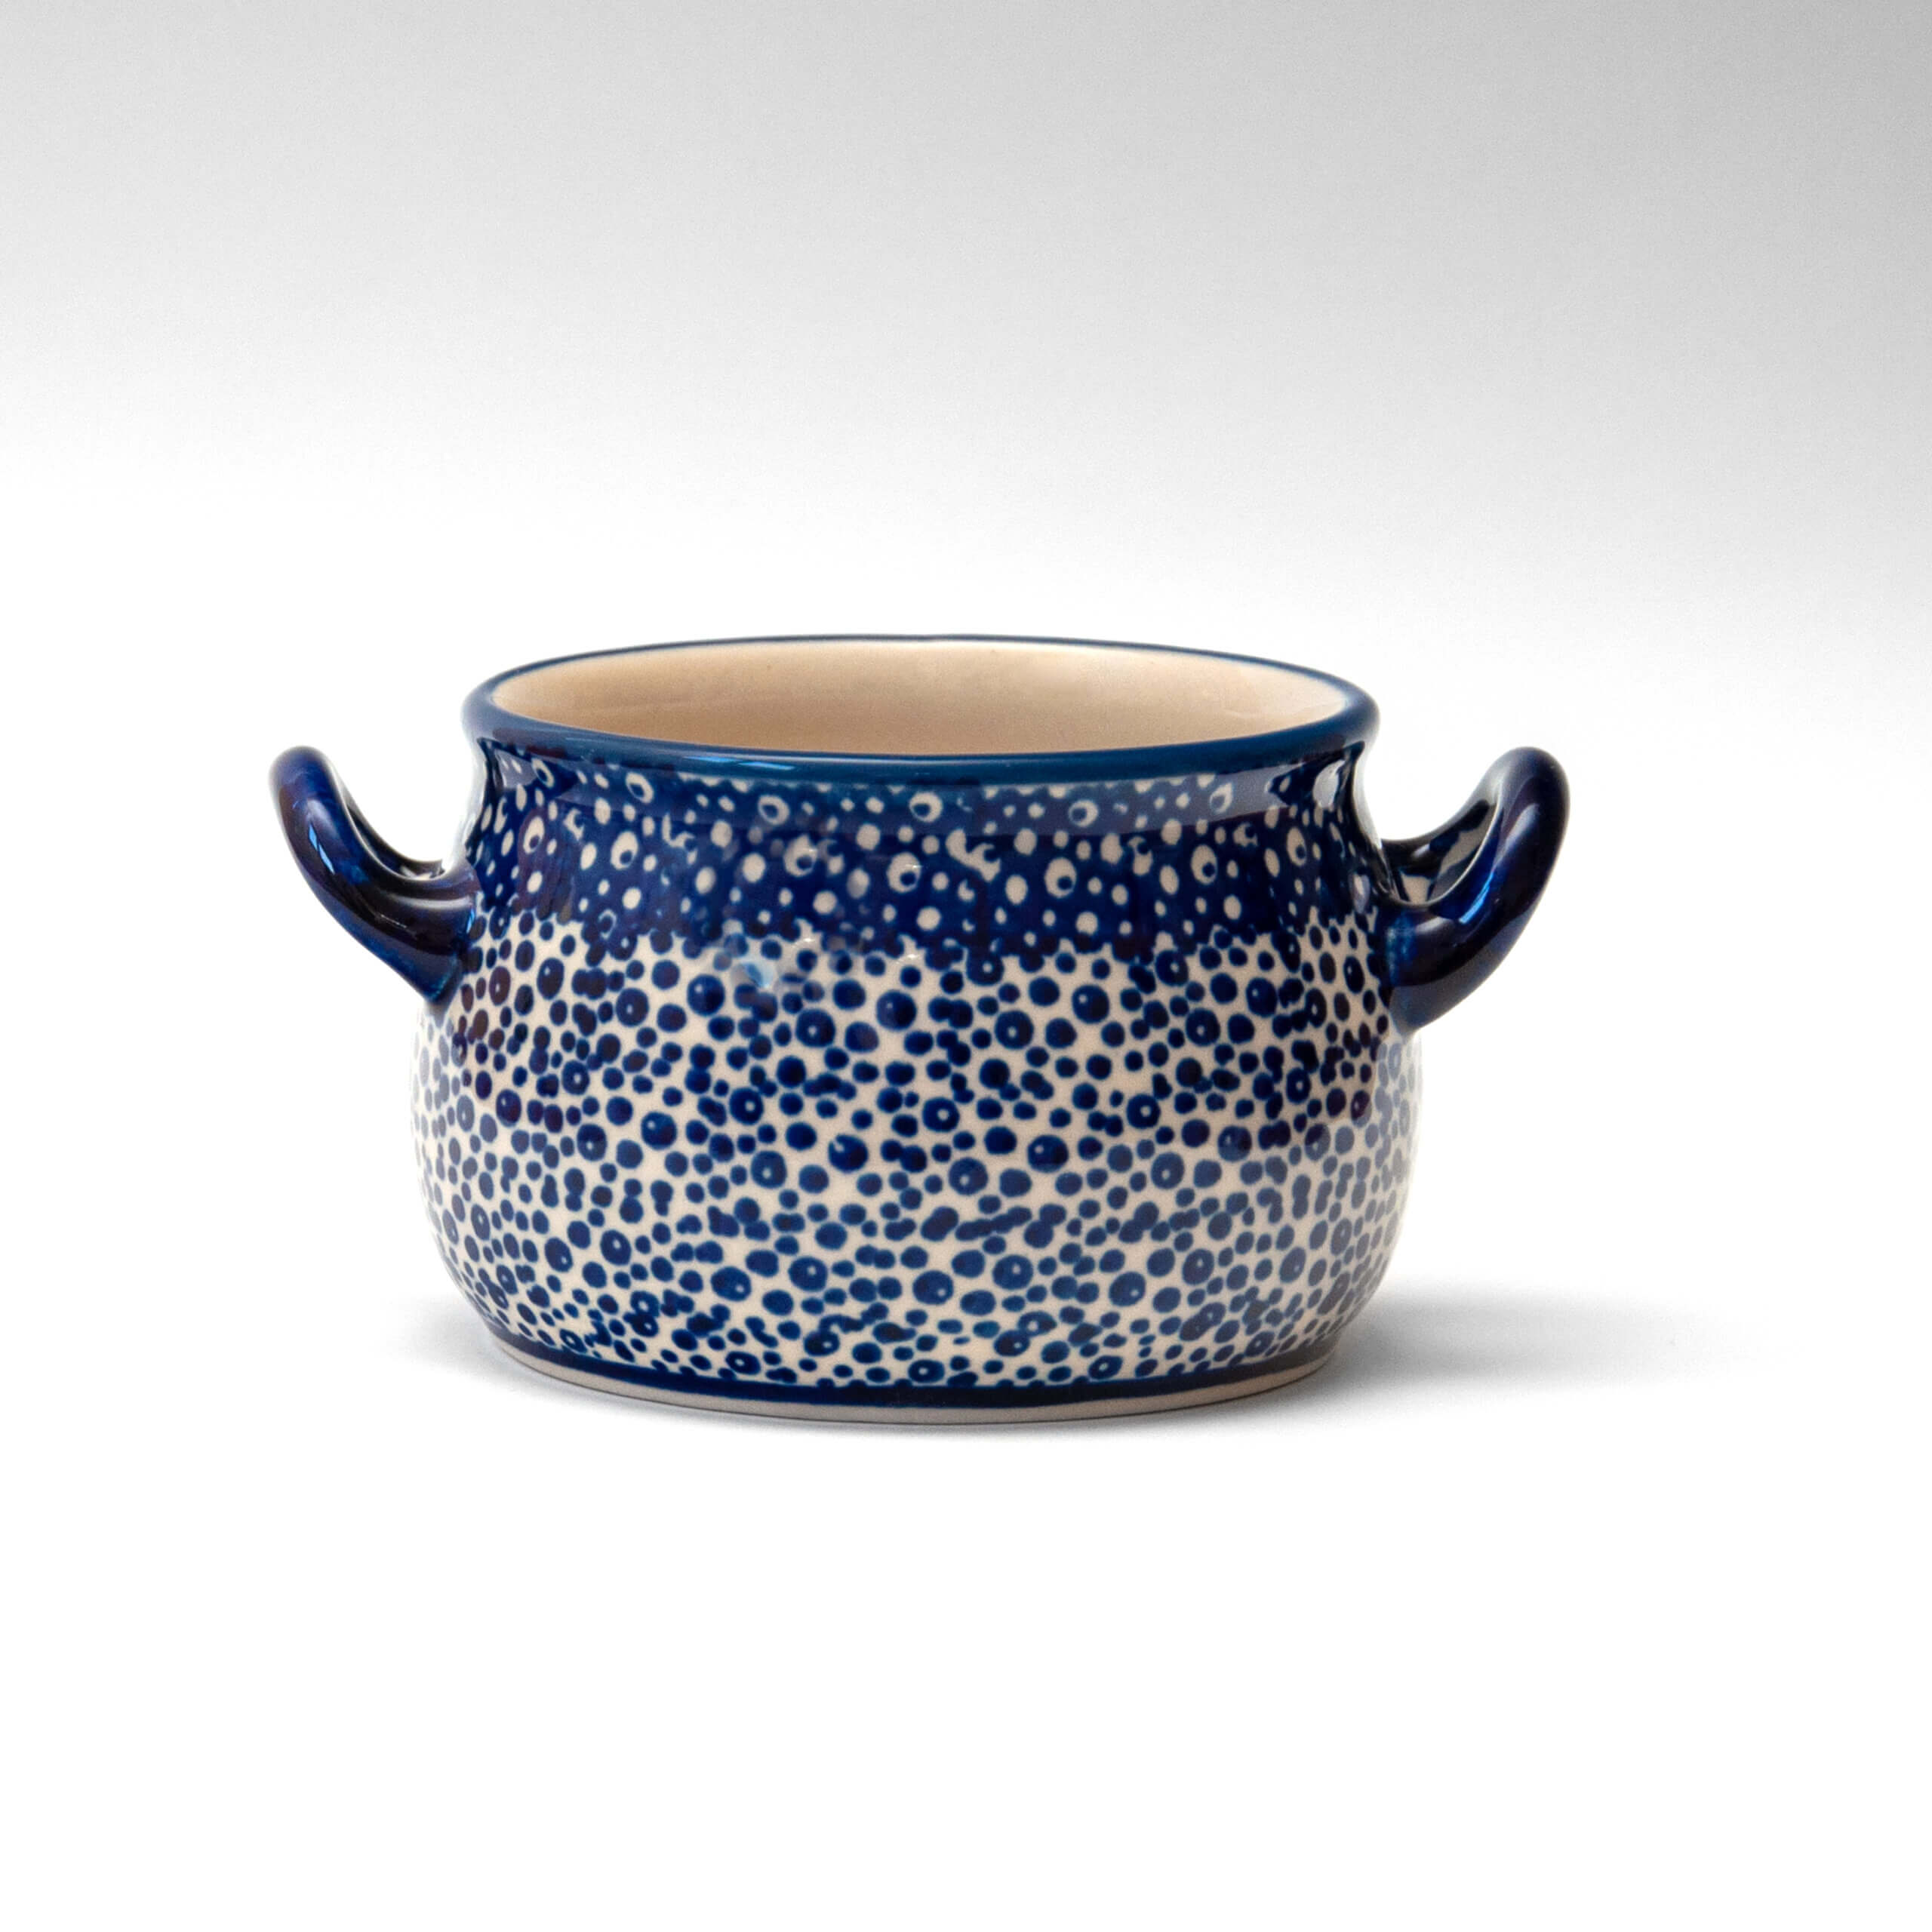 Bowl 17 cm Decor js14 Handmade NEW Bunzlauer Ceramic Dish